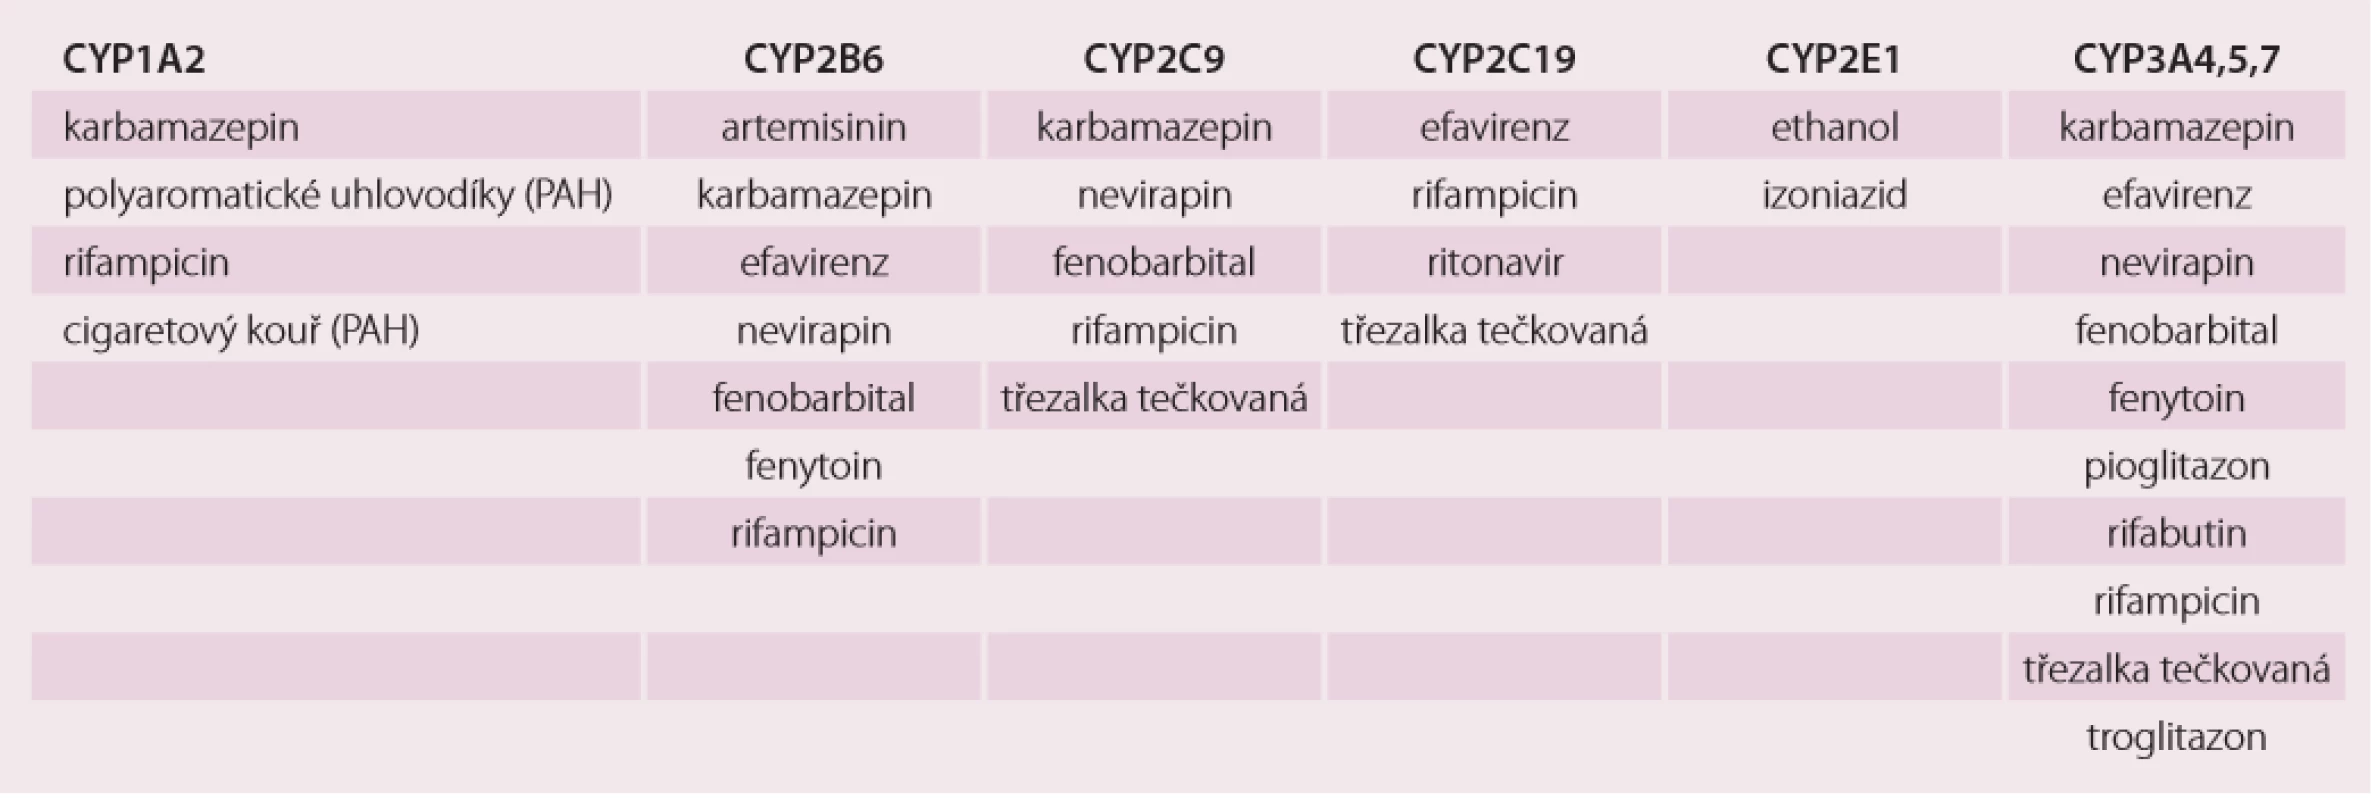  Induktory enzymů cytochromu P450 [8,10,12].